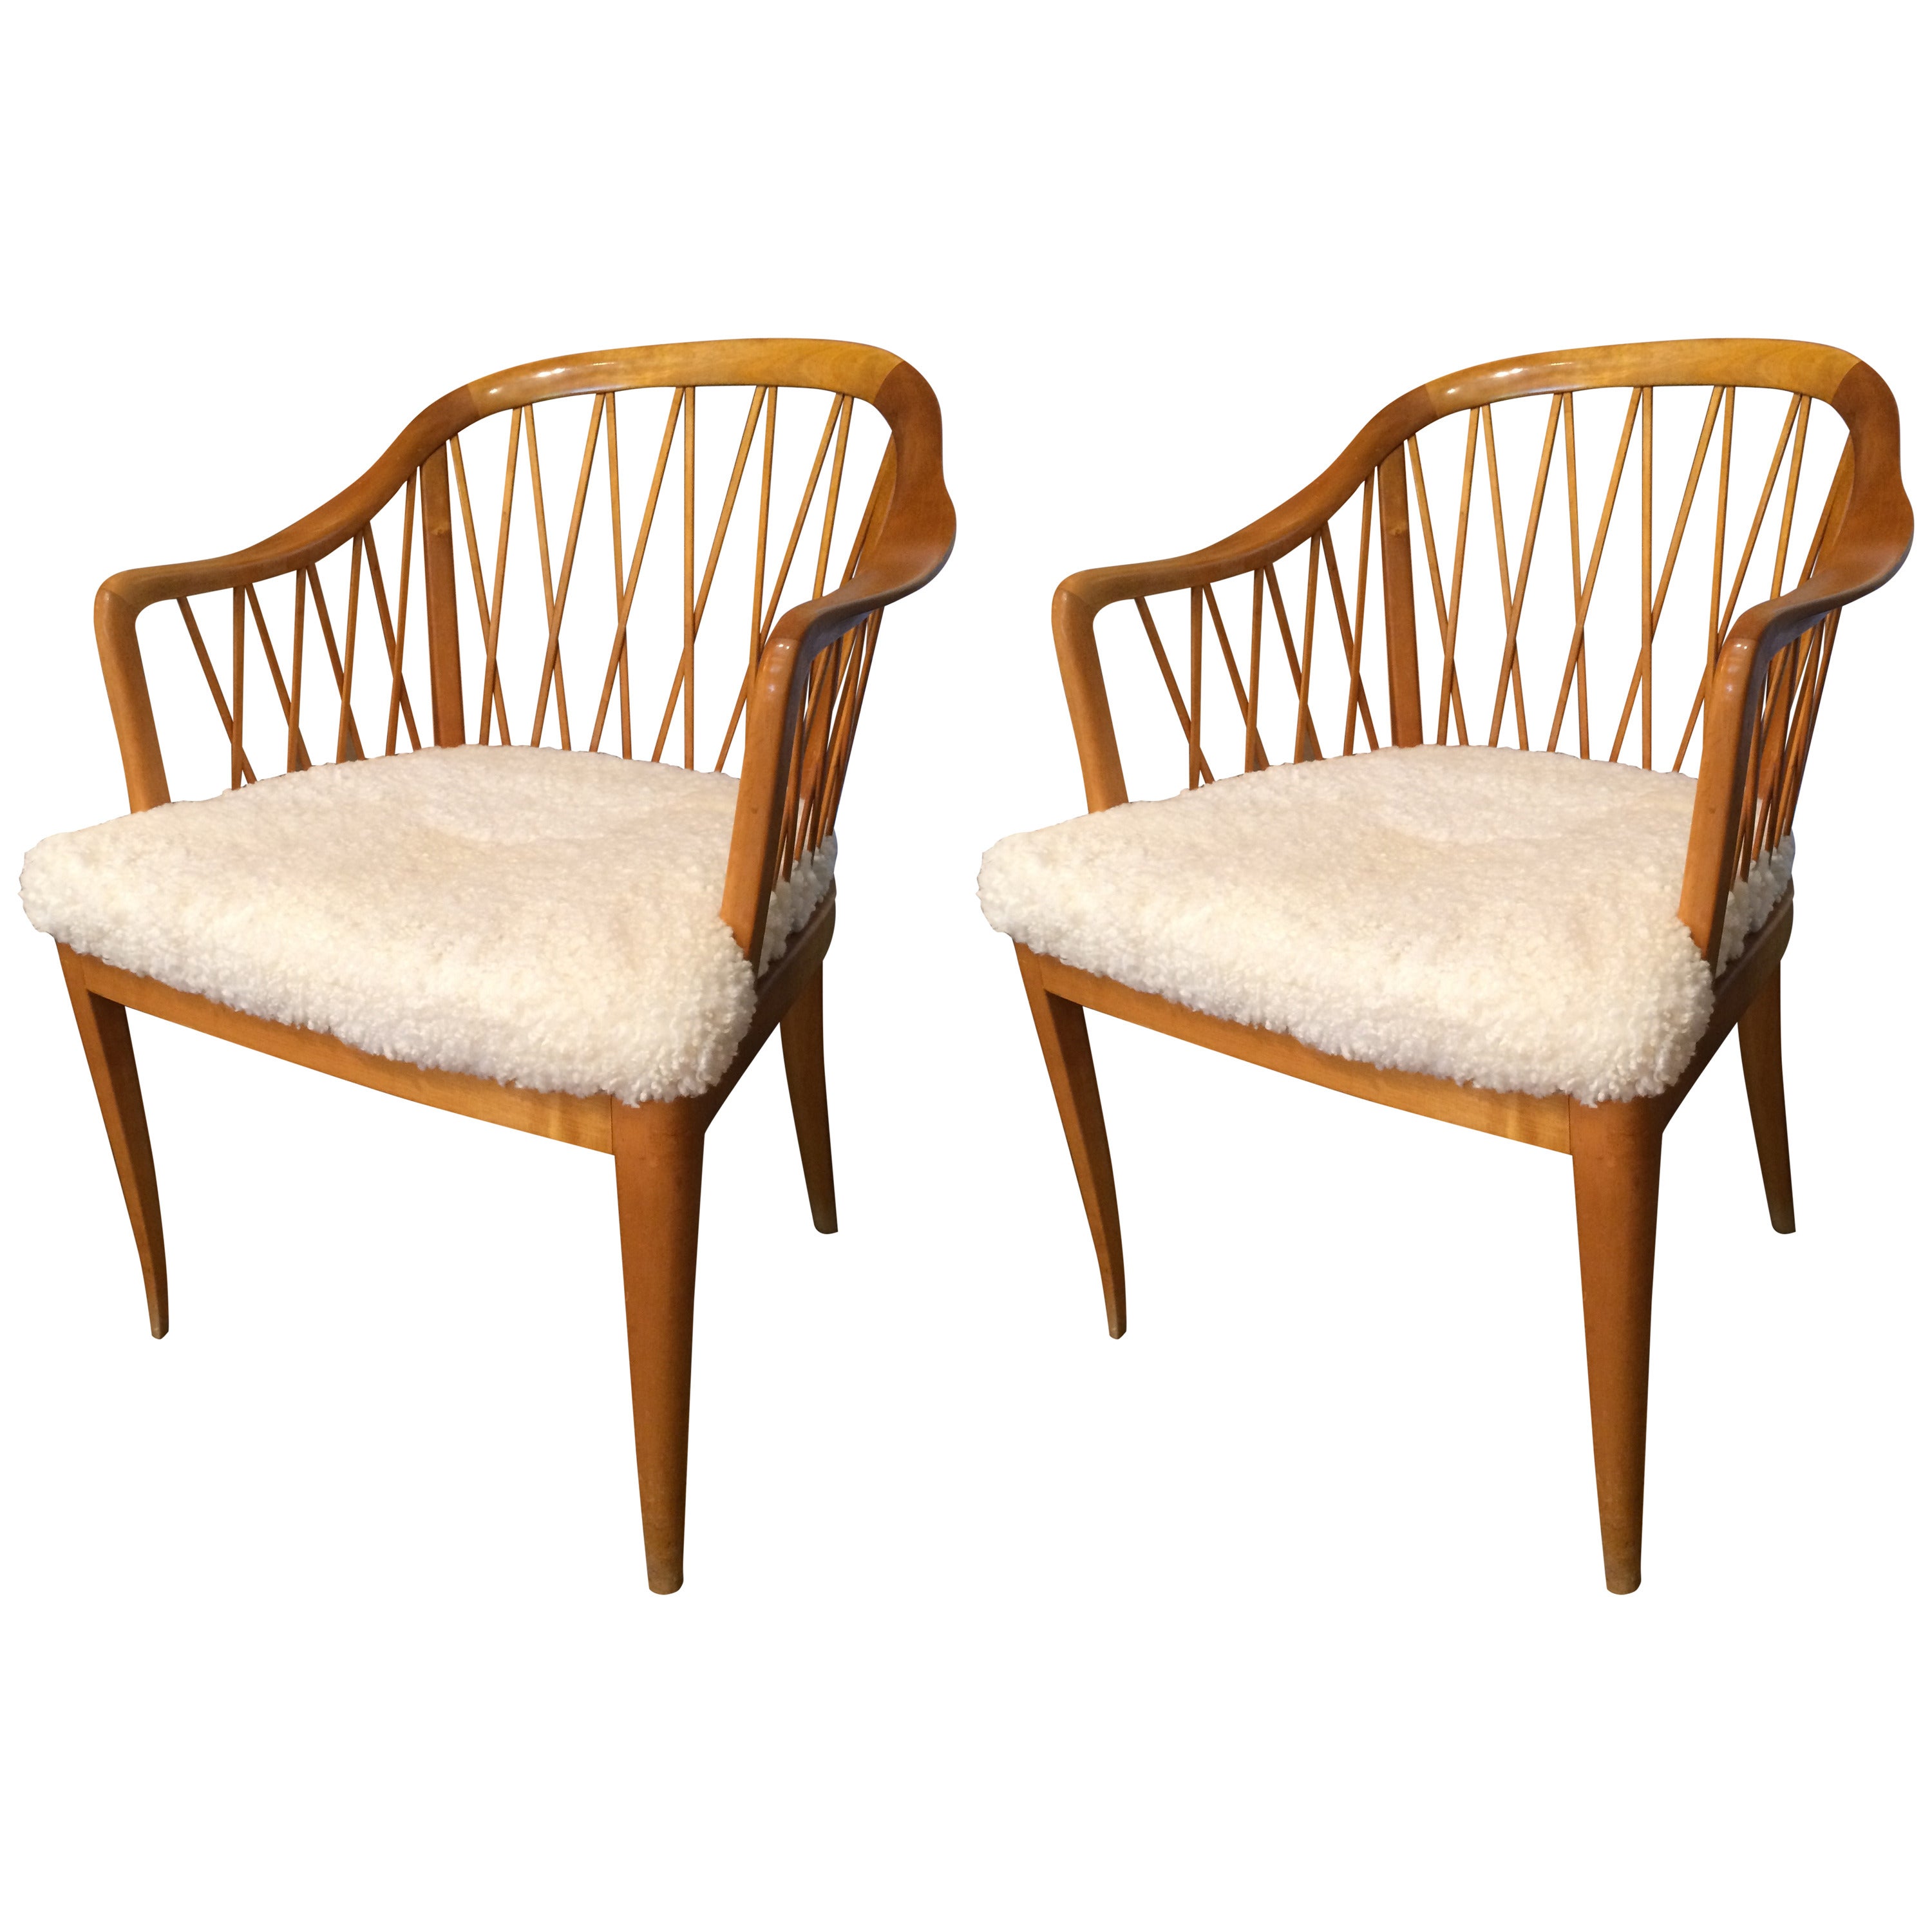 Pair of Swedish, 1940s Carl Malmstens "Widemar Chairs"